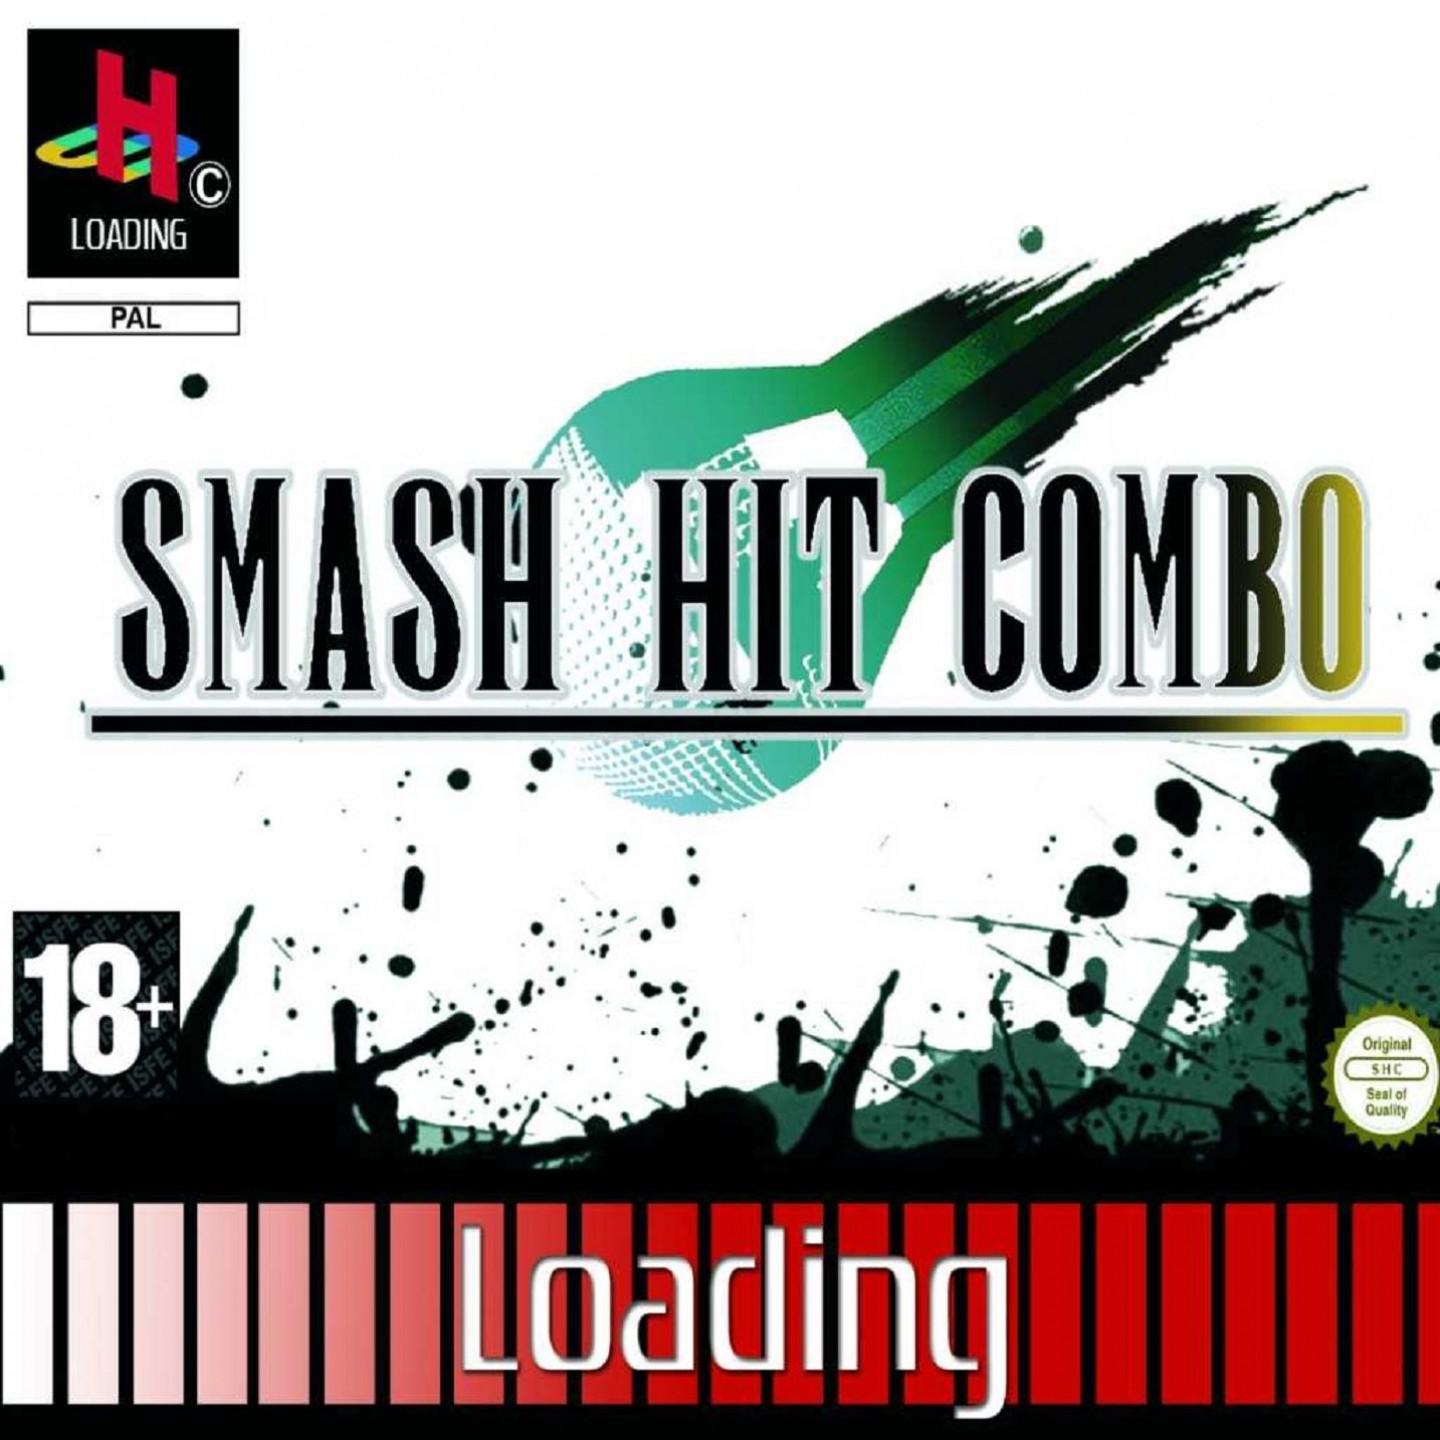 Smash Hit Combo - Contre nature (Unplugged)